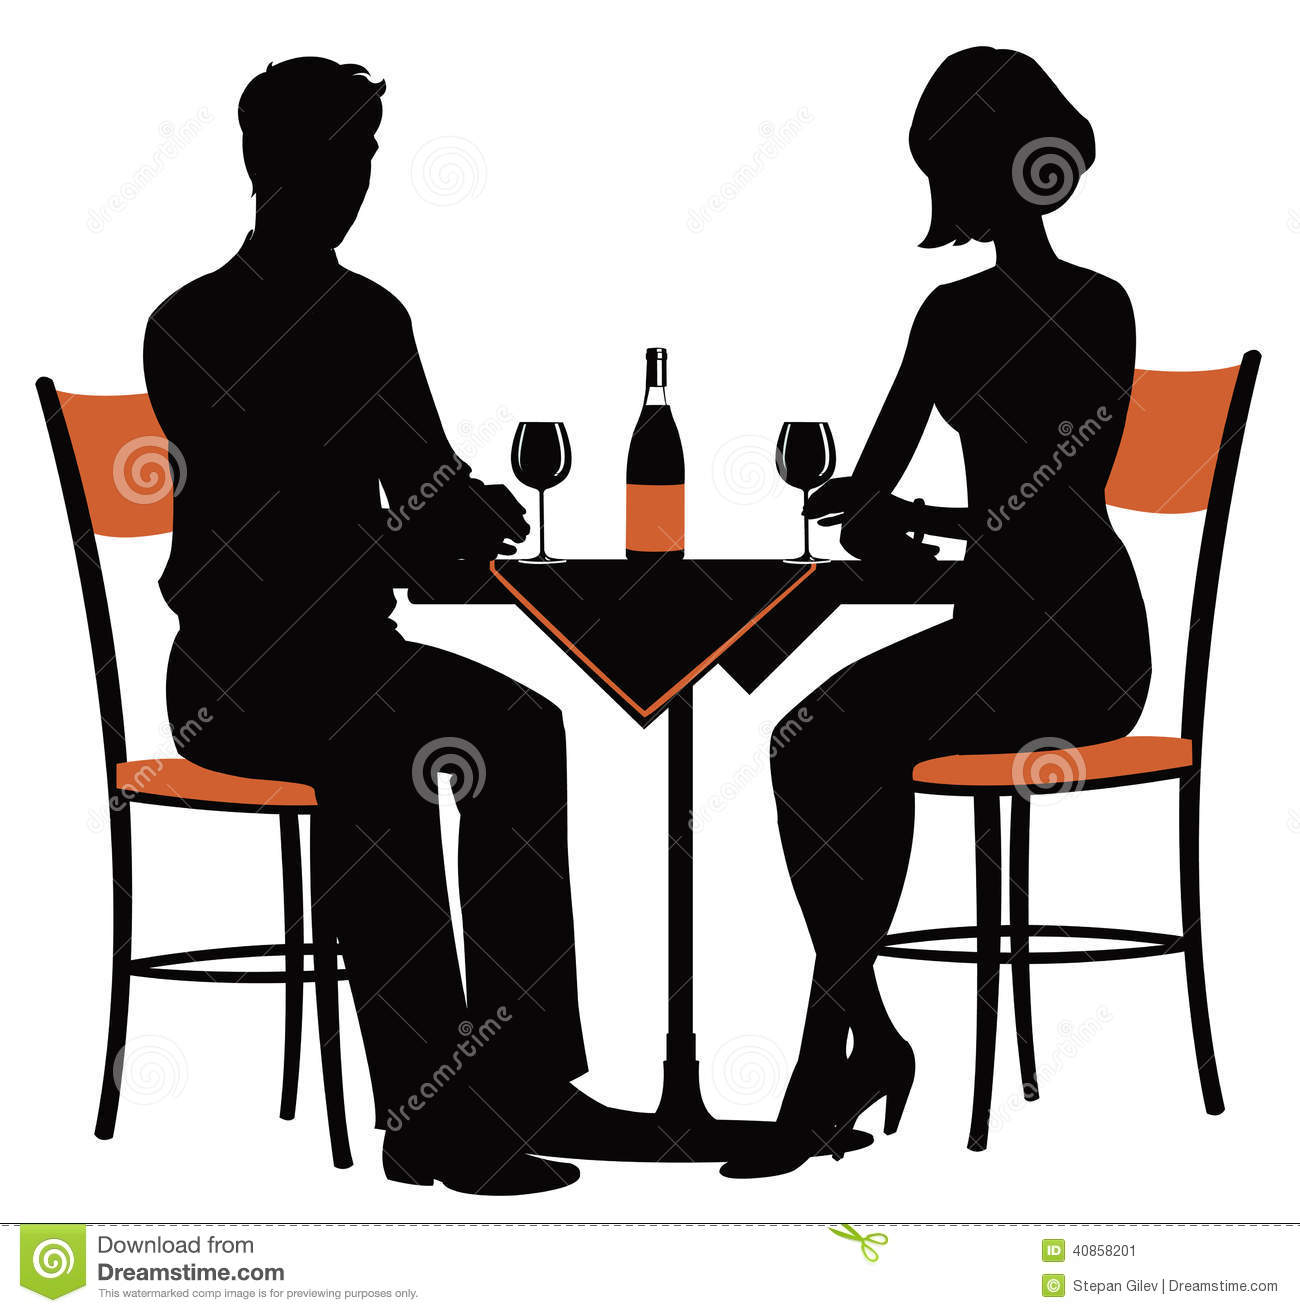 Romantic dinner date clipart